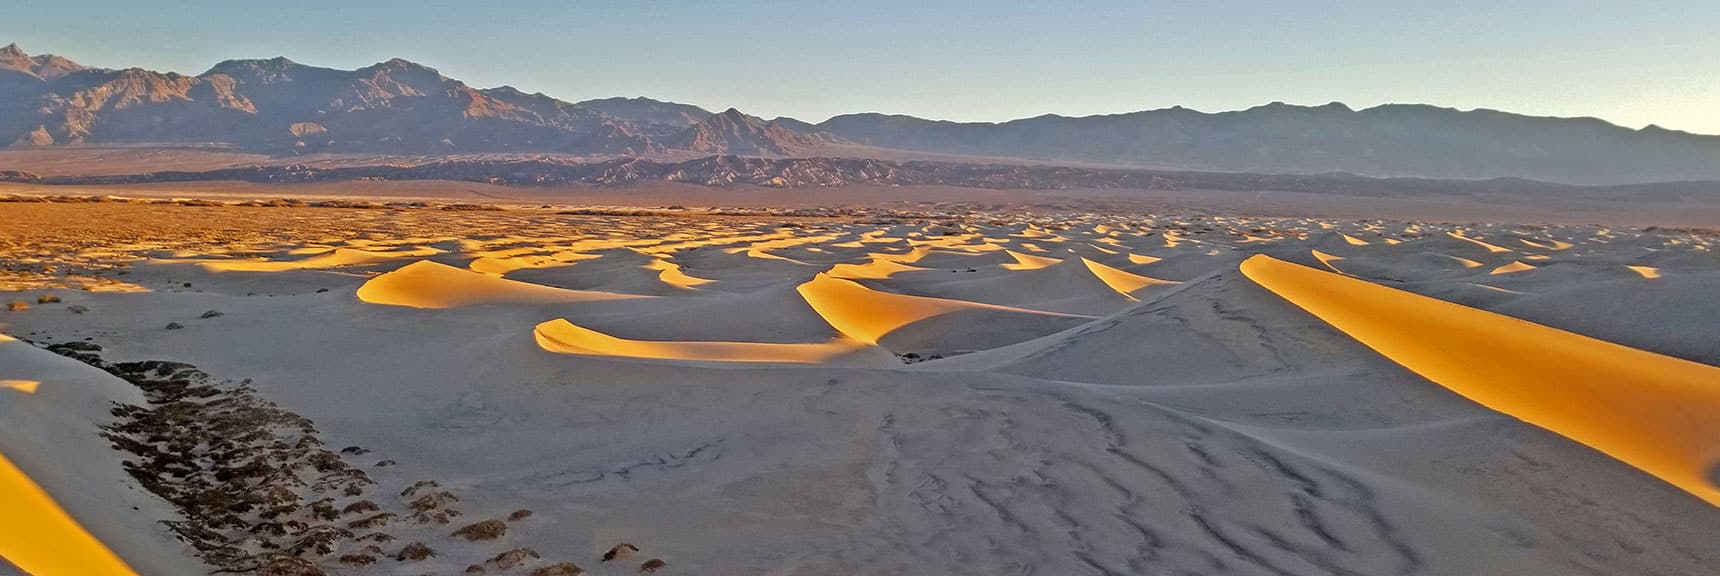 View East | Mesquite Sand Dunes Sunrise | Death Valley National Park, California